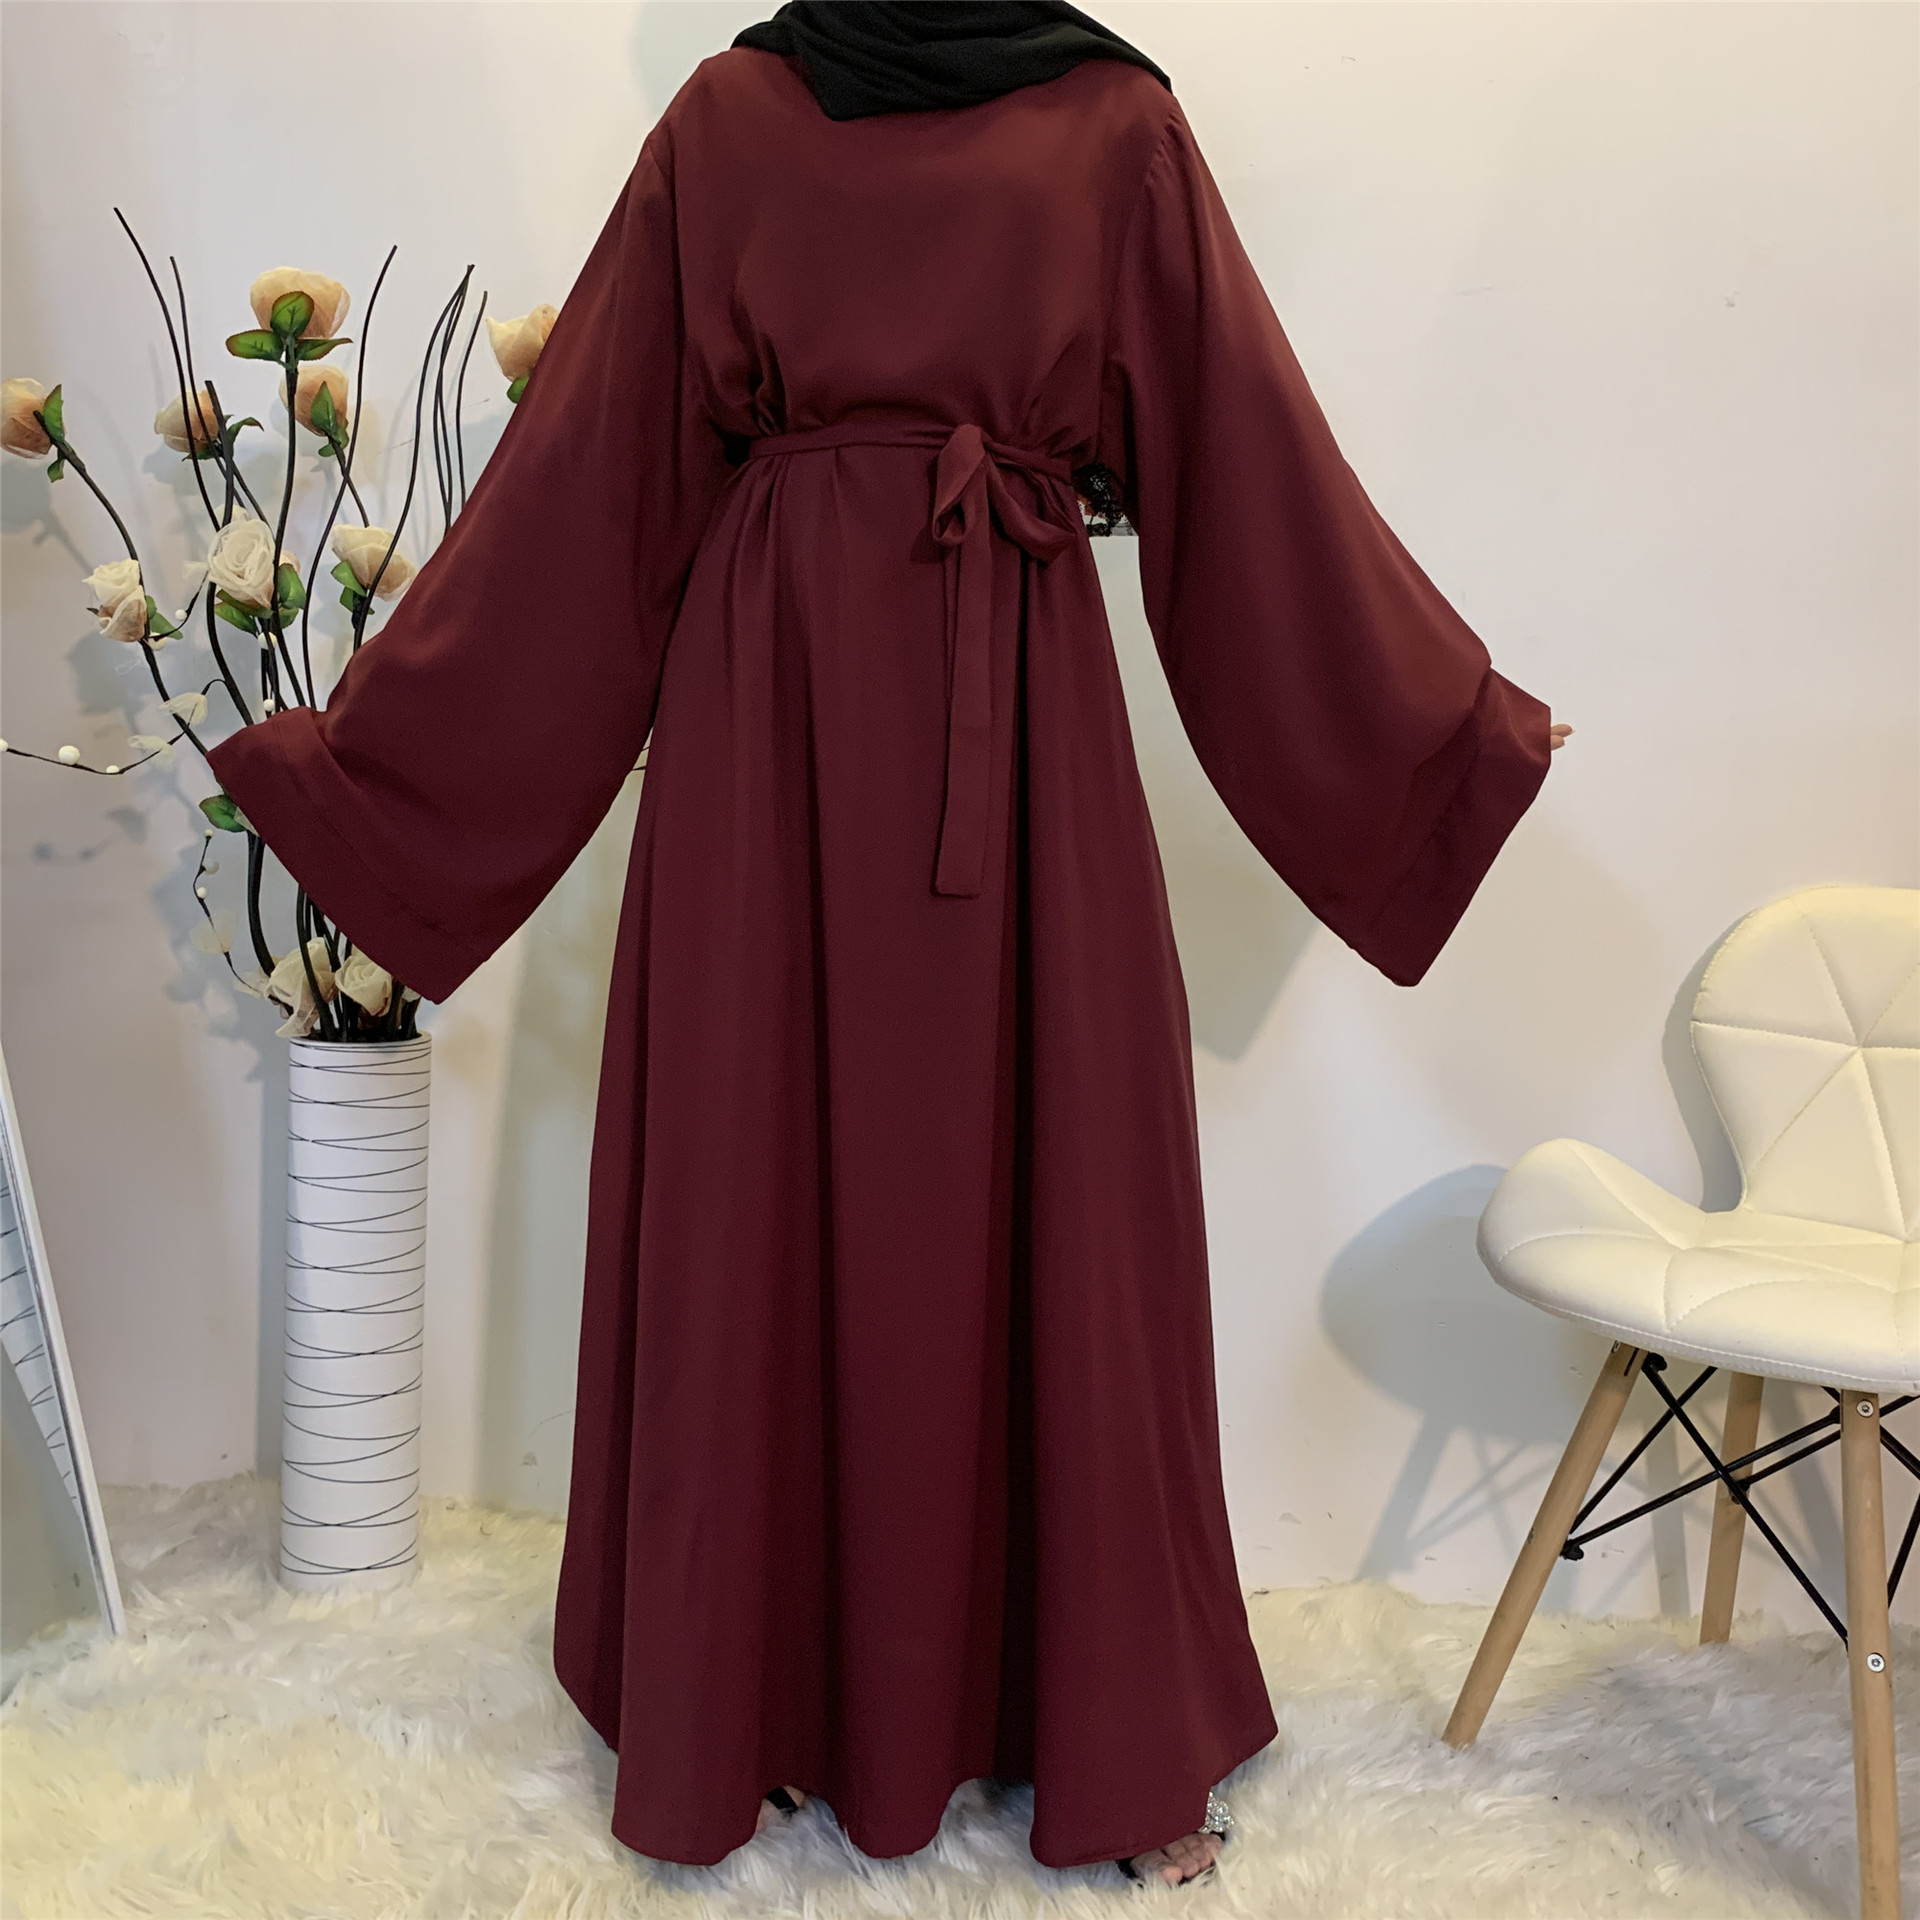 Muslim-Fashion-Hijab-Dubai-Abaya-Long-Dresses-Women-With-Sashes-Islam-Clothing-A